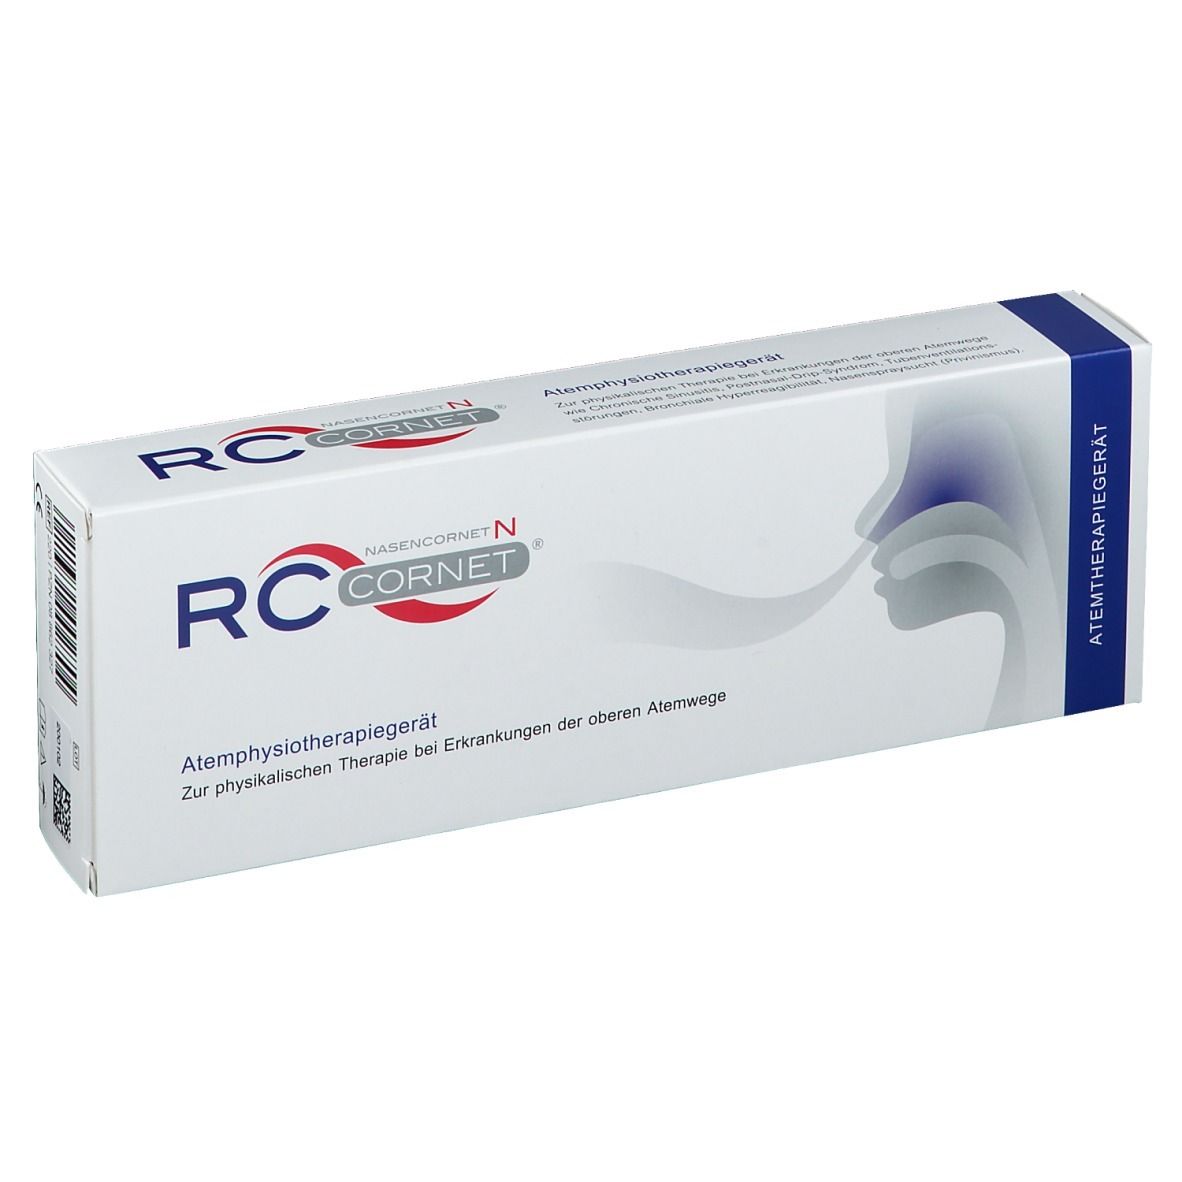 RC-Cornet® N Nasencornet